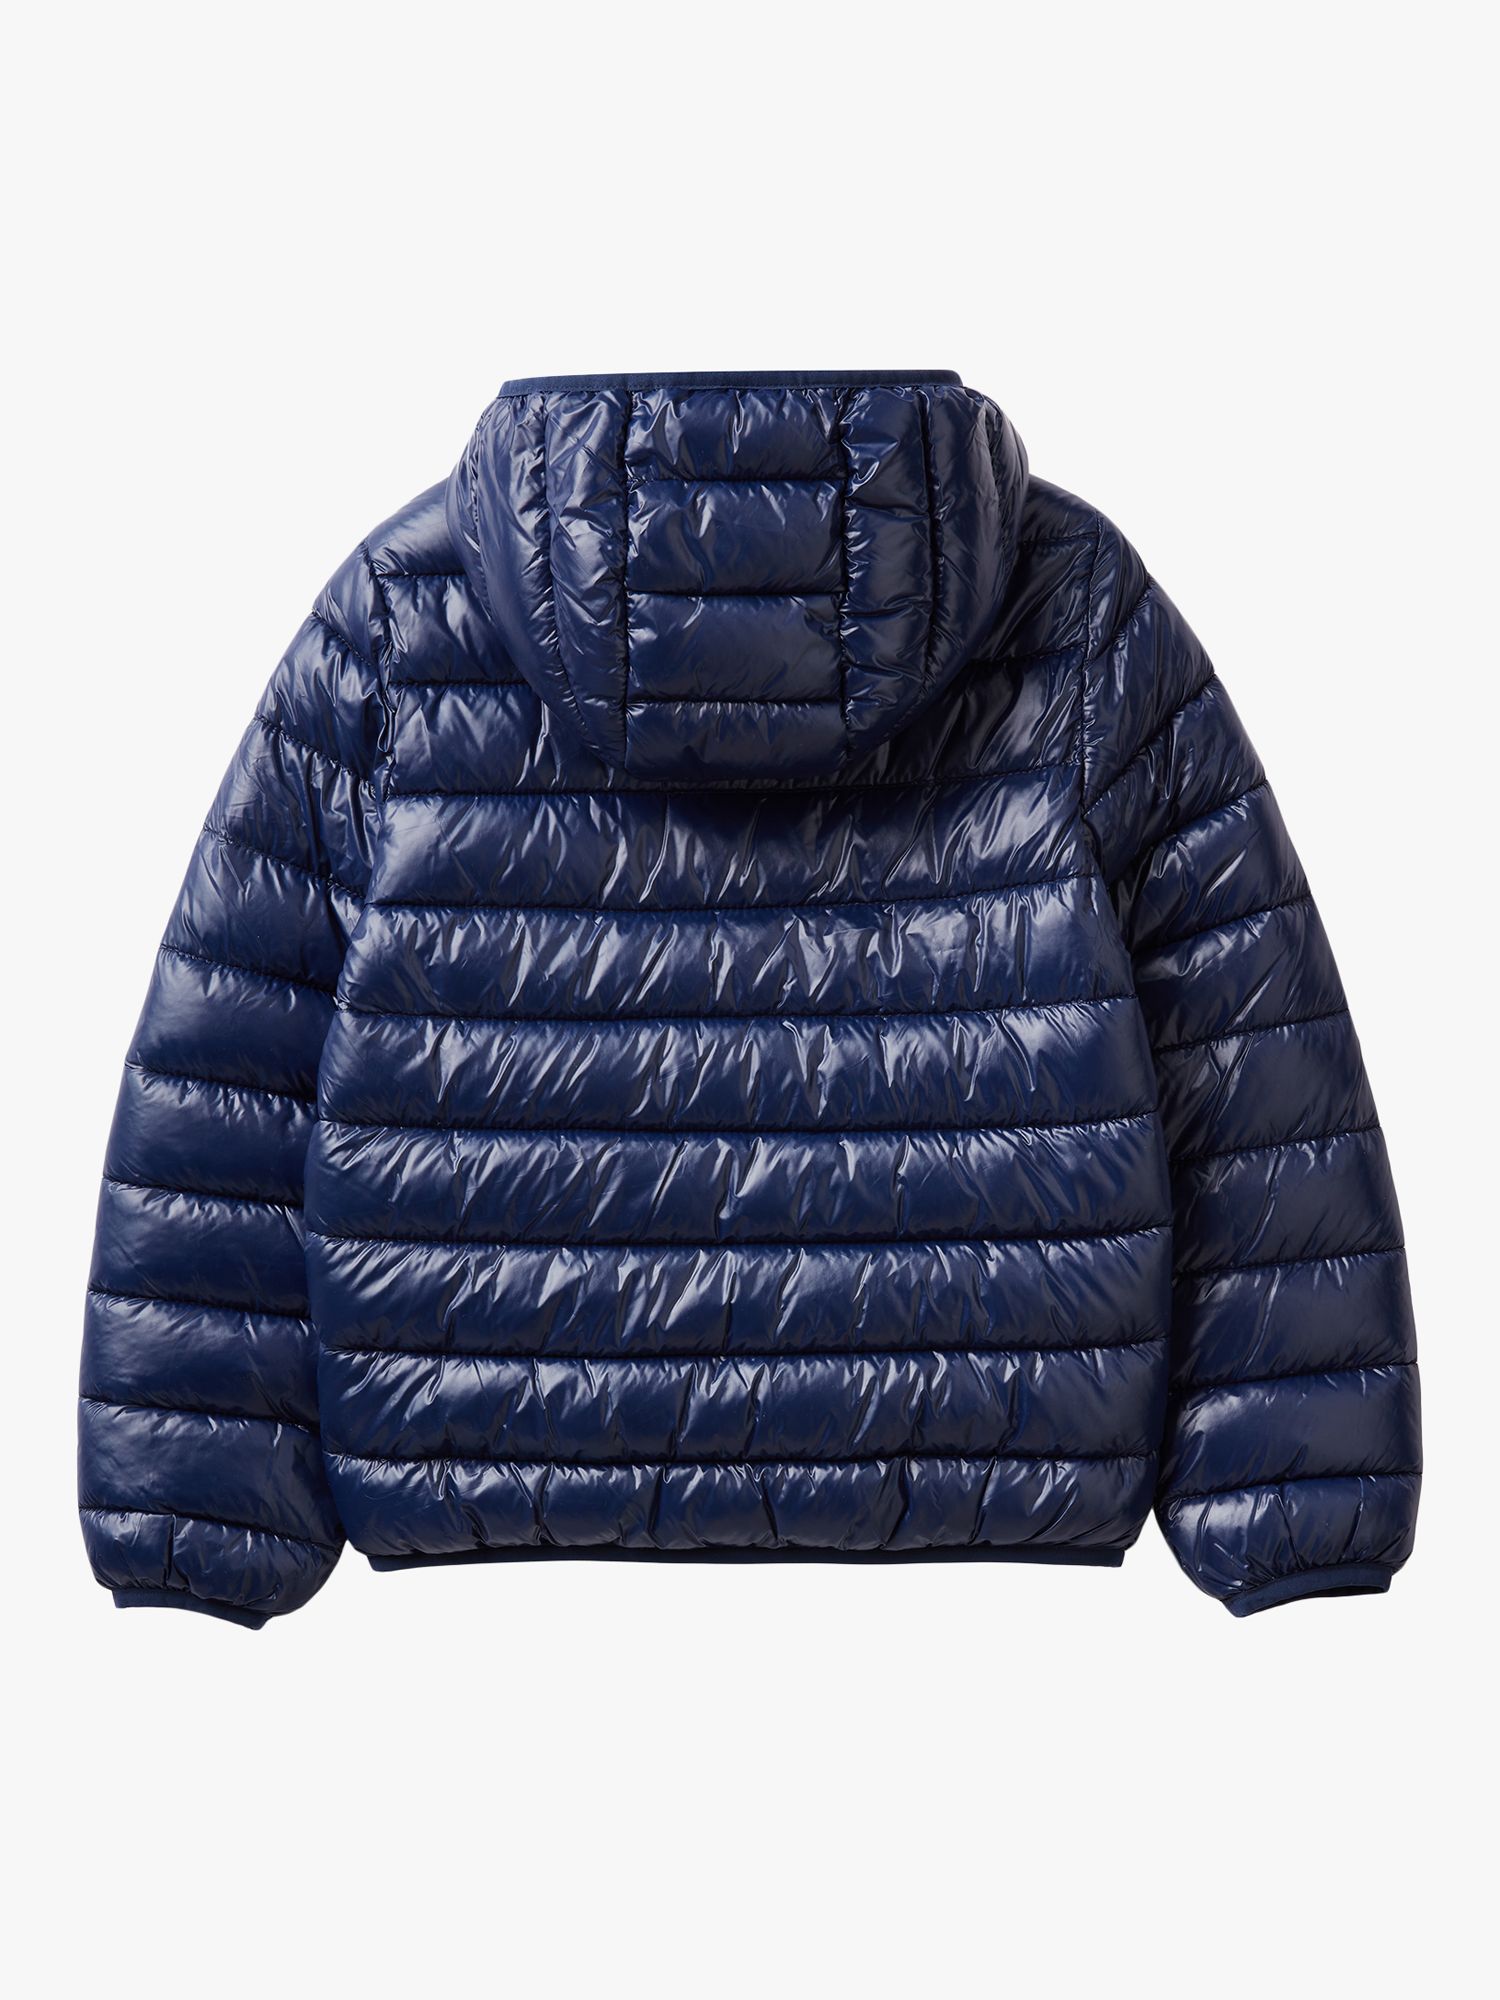 Benetton Kids' Hooded Puffer Jacket, Night Blue, 7-8 years